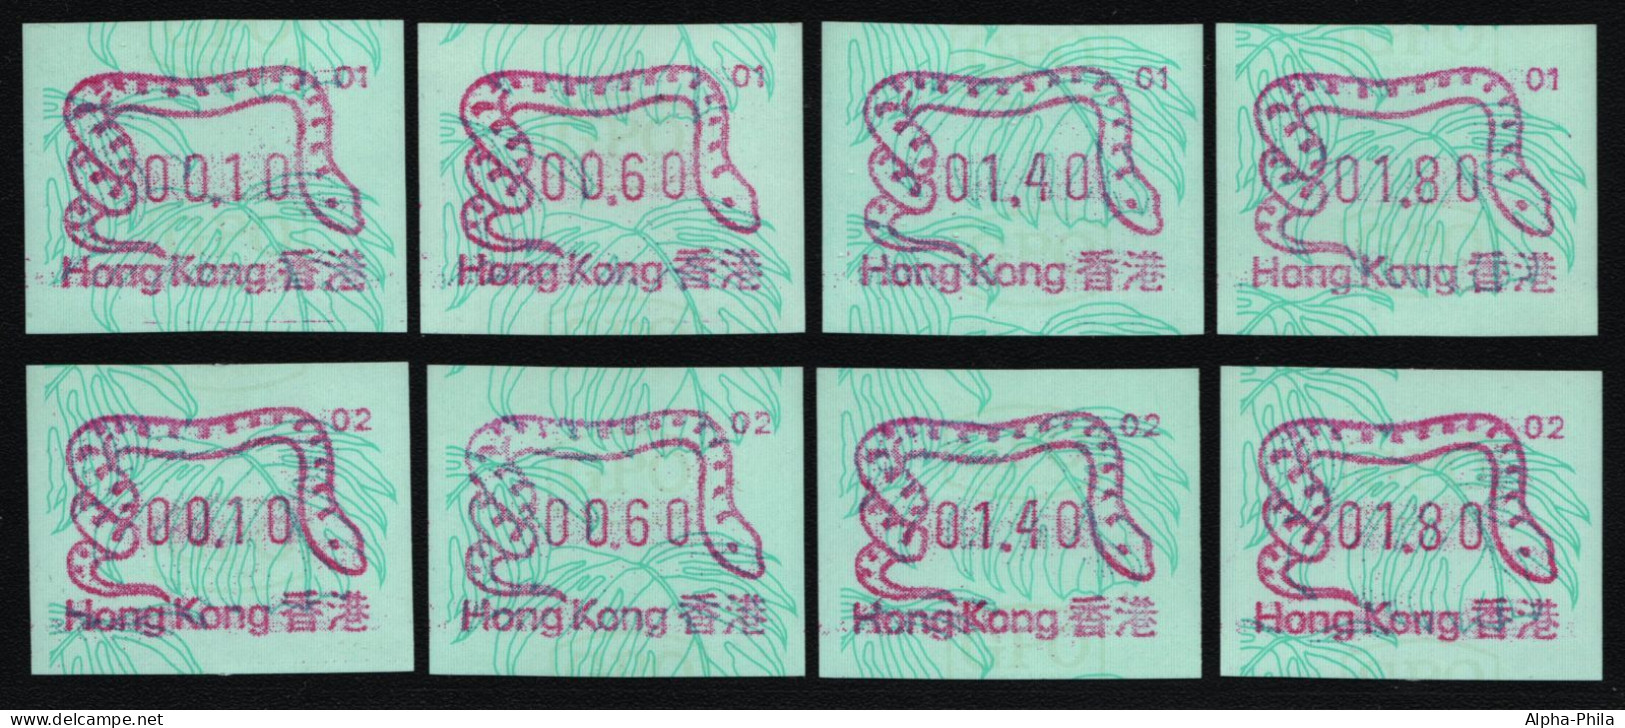 Hongkong 1989 - Mi-Nr. ATM 4 ** - MNH - Automat 01 & 02 - Je 4 Wertstufen - Automaten